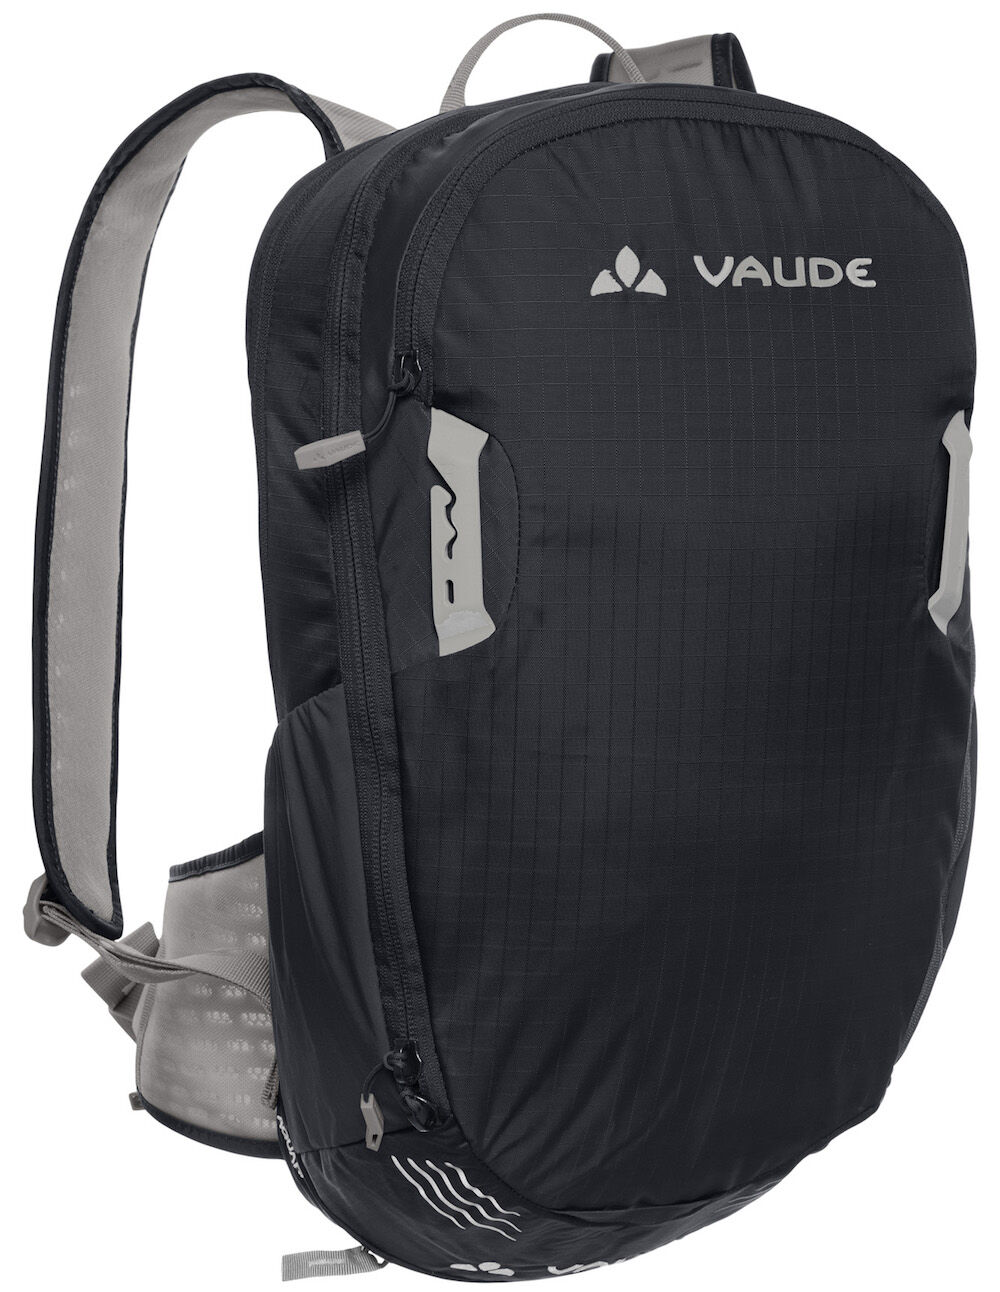 Vaude - Aquarius 9 + 3 - Backpack